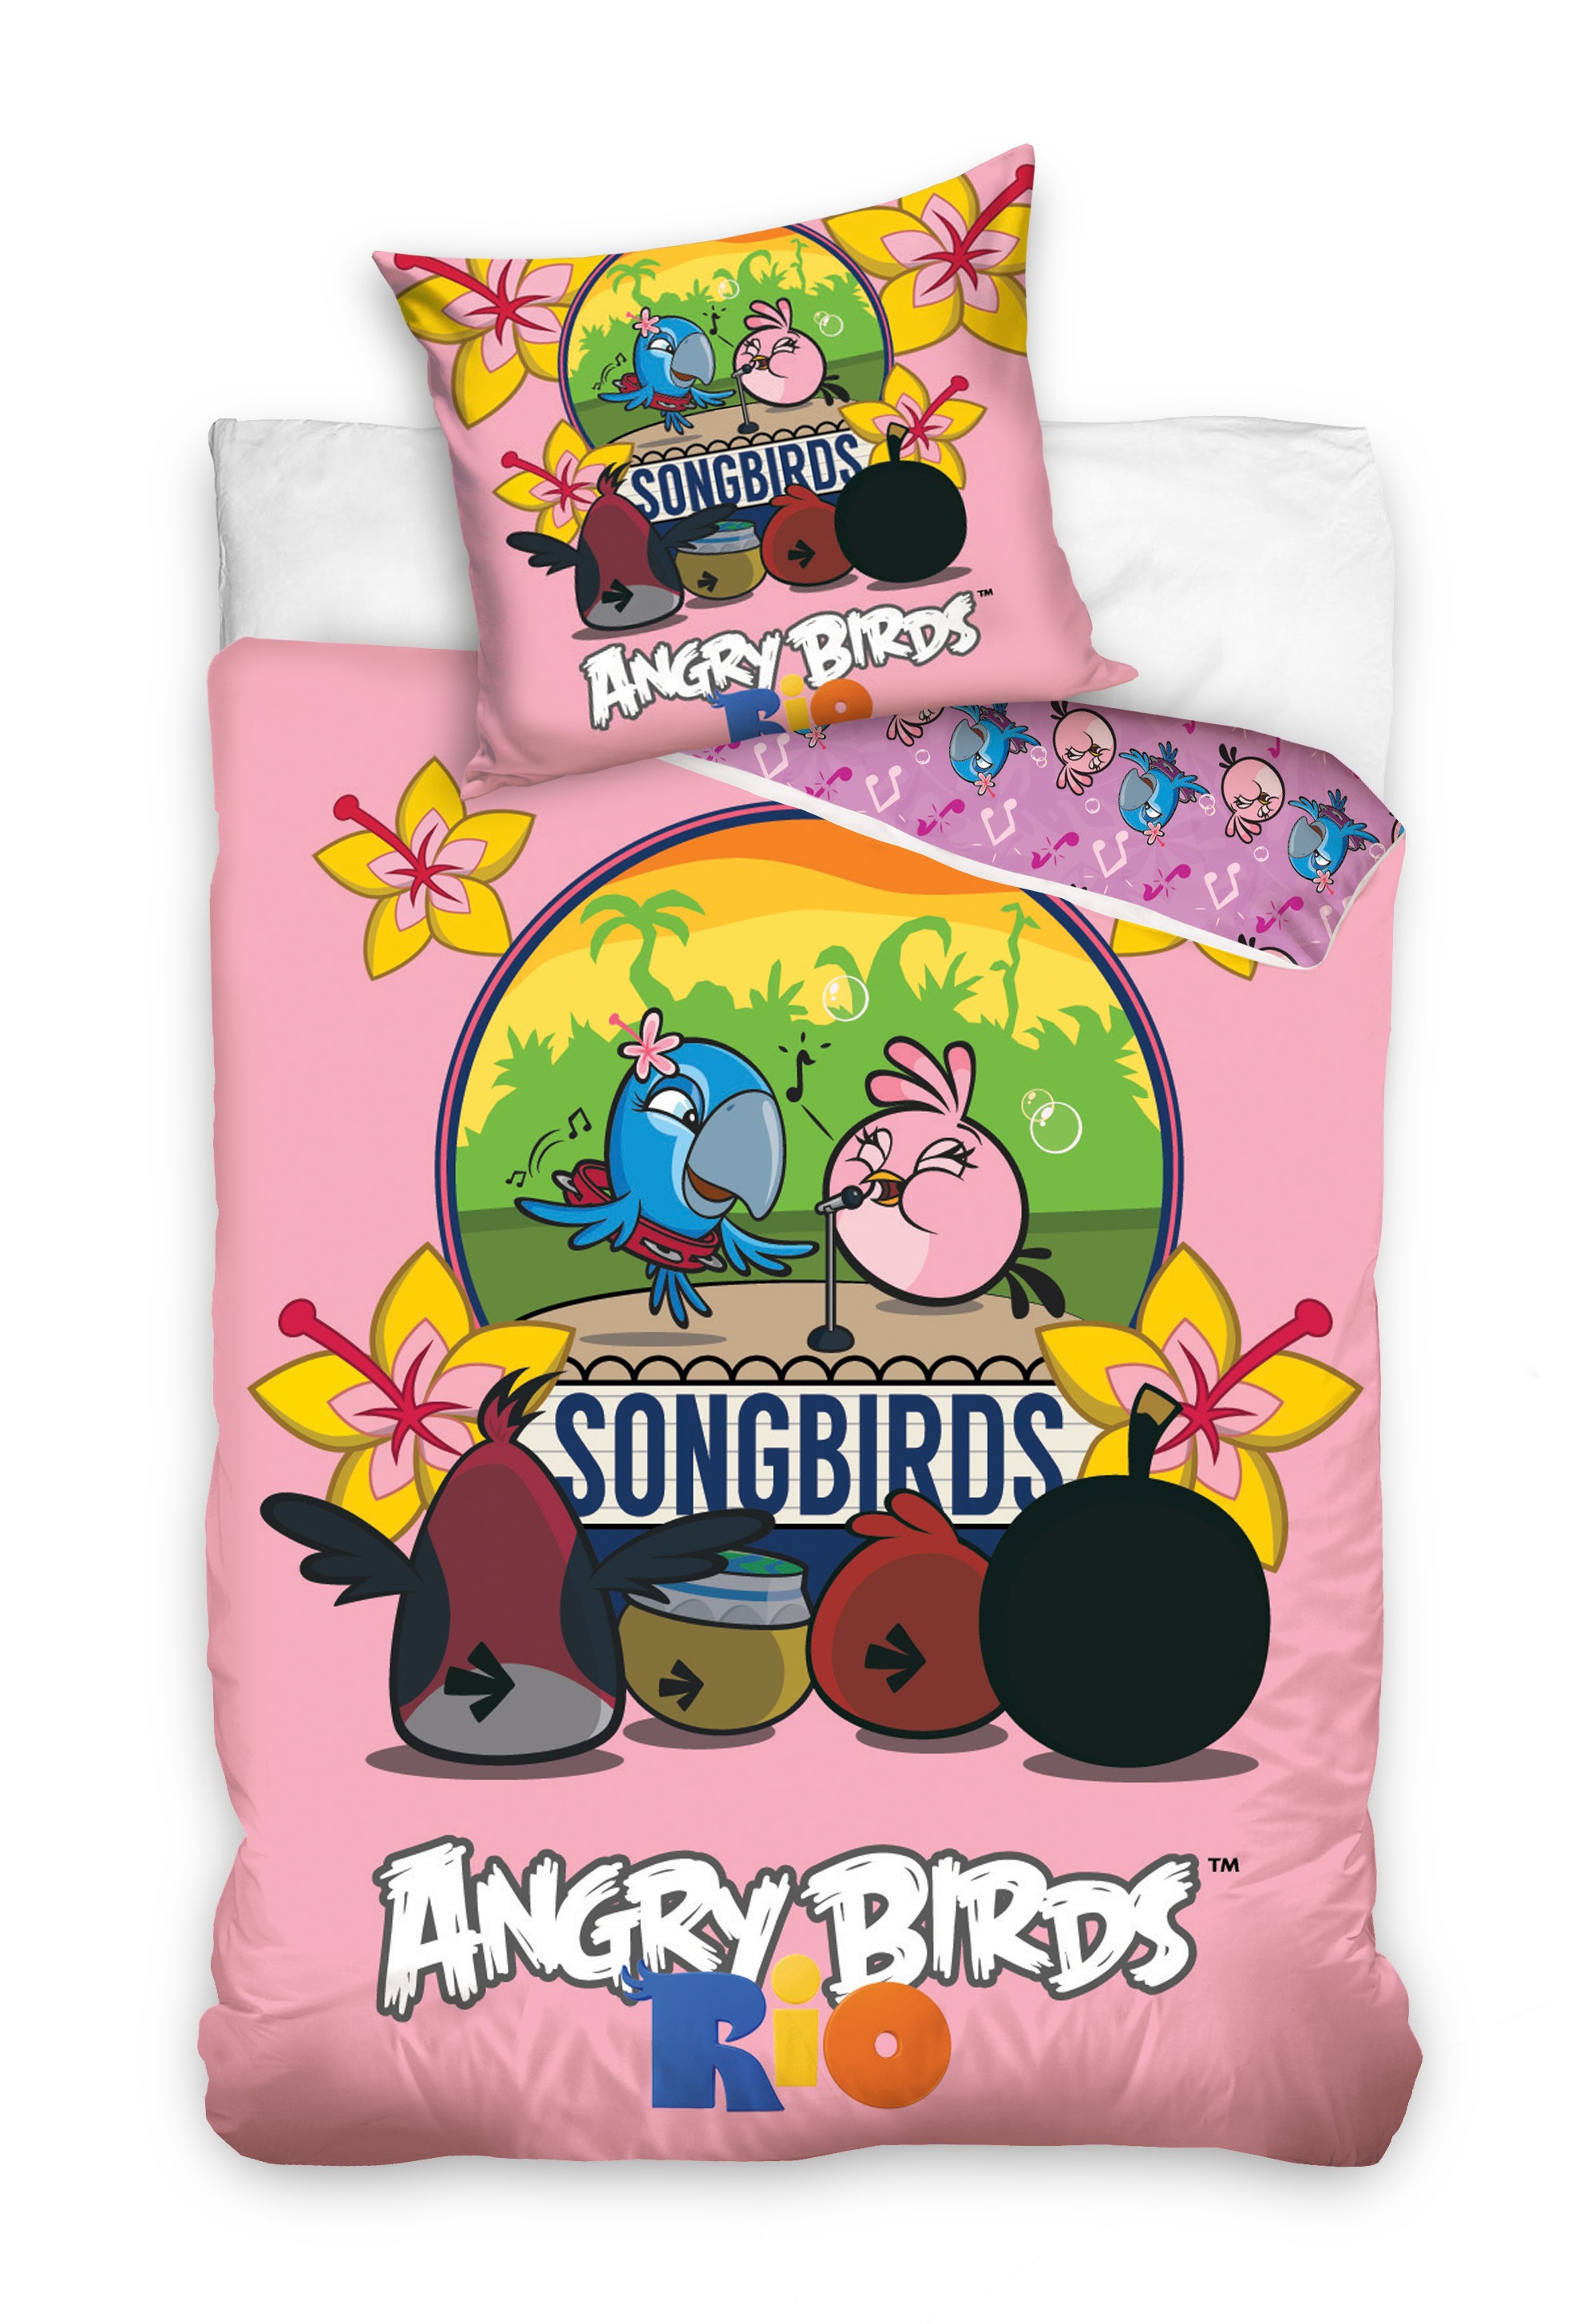 Povlak na dětskou postel růžový s Angry Birds